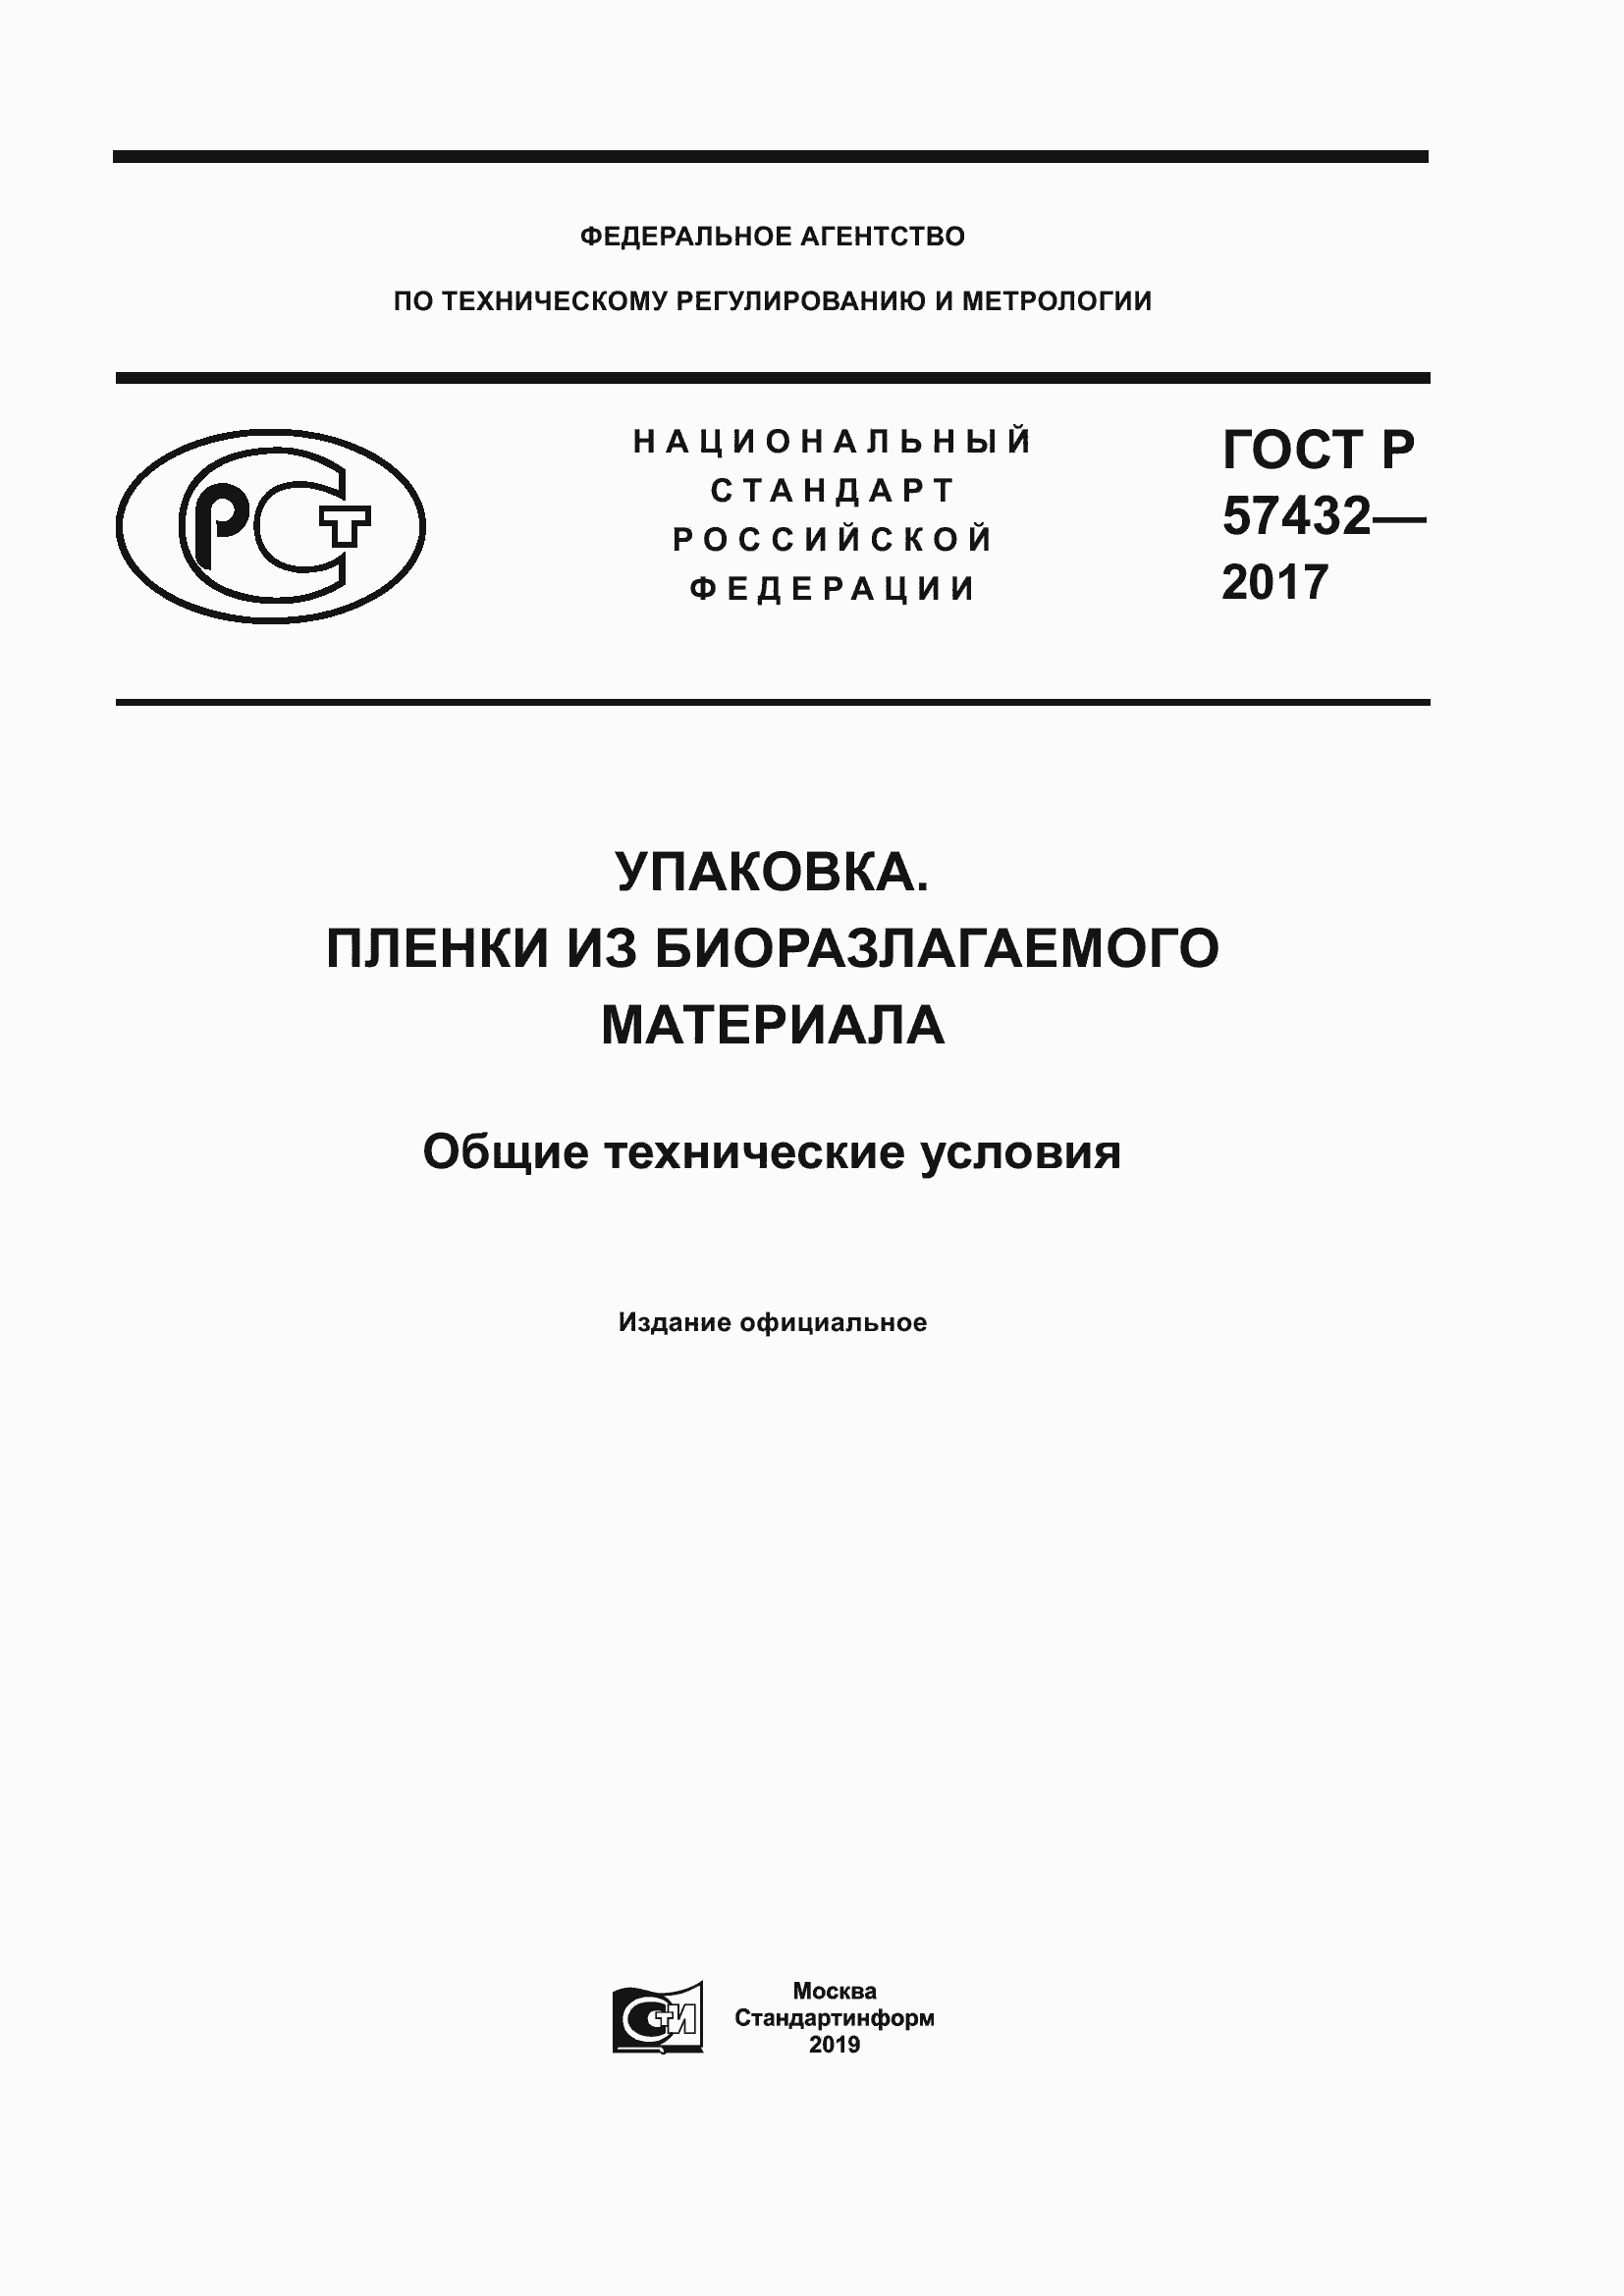 ГОСТ Р 57432-2017. Страница 1